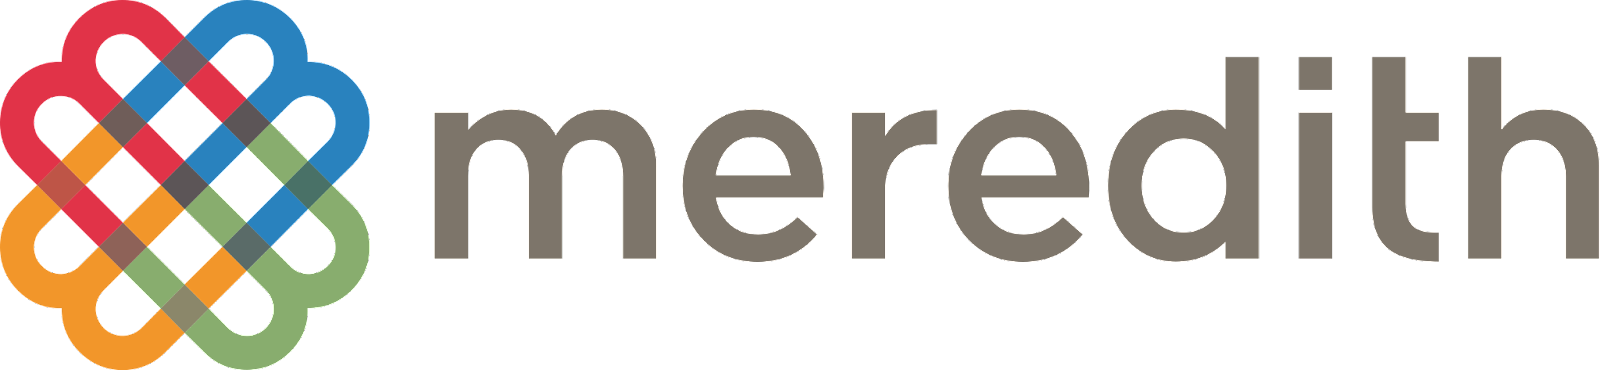 Meredith logo